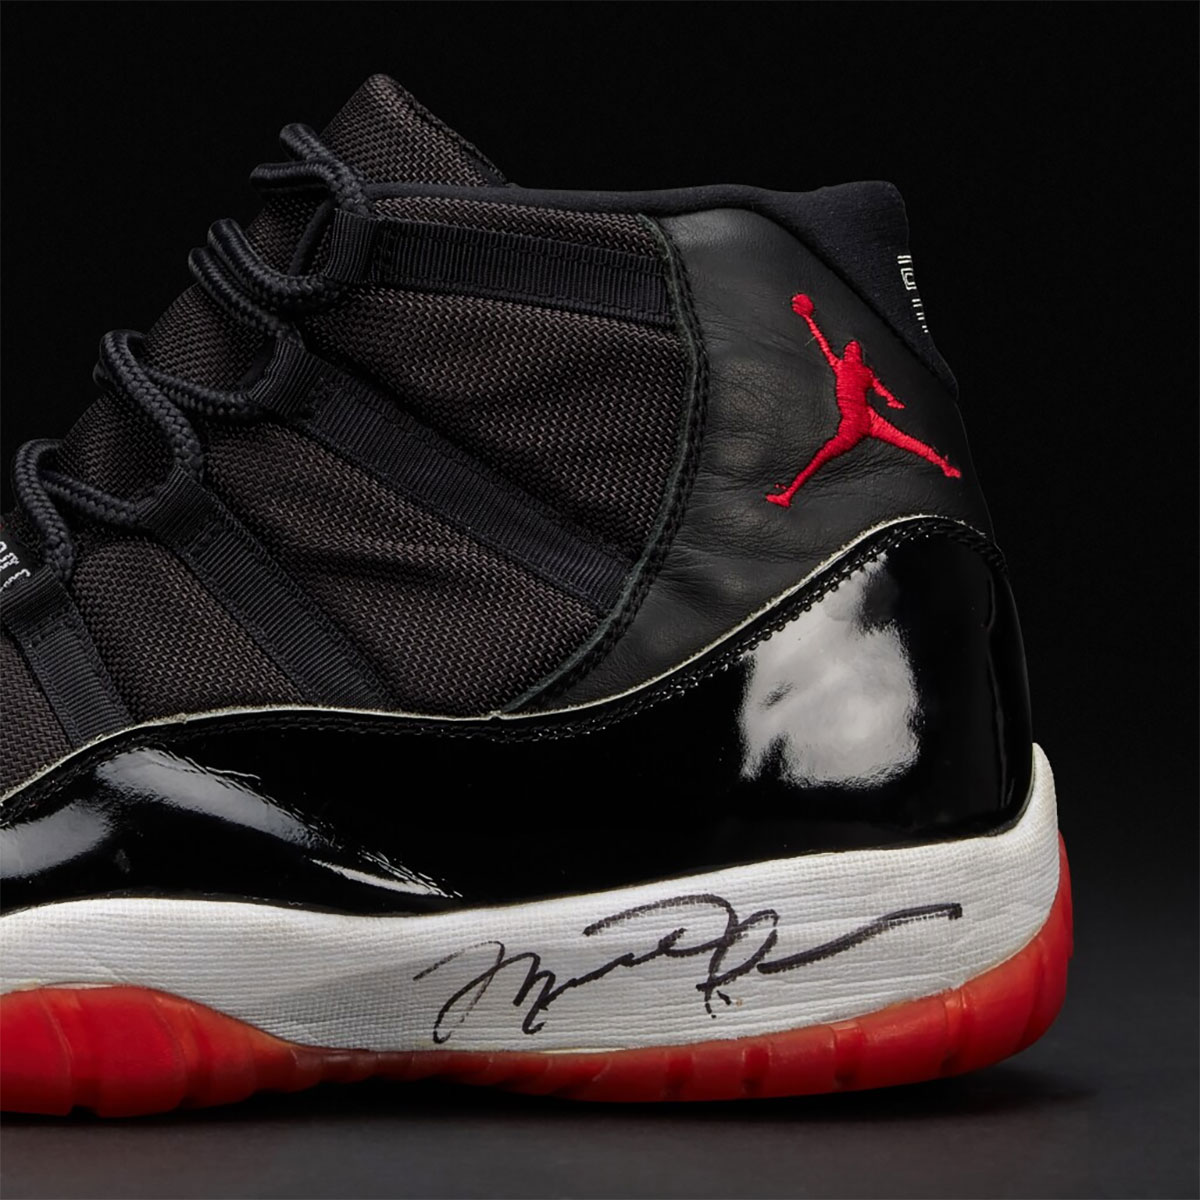 's Jordan Legacy 312 Goes Low Game Worn Autographed Shoes 1996 Finals Auction 6